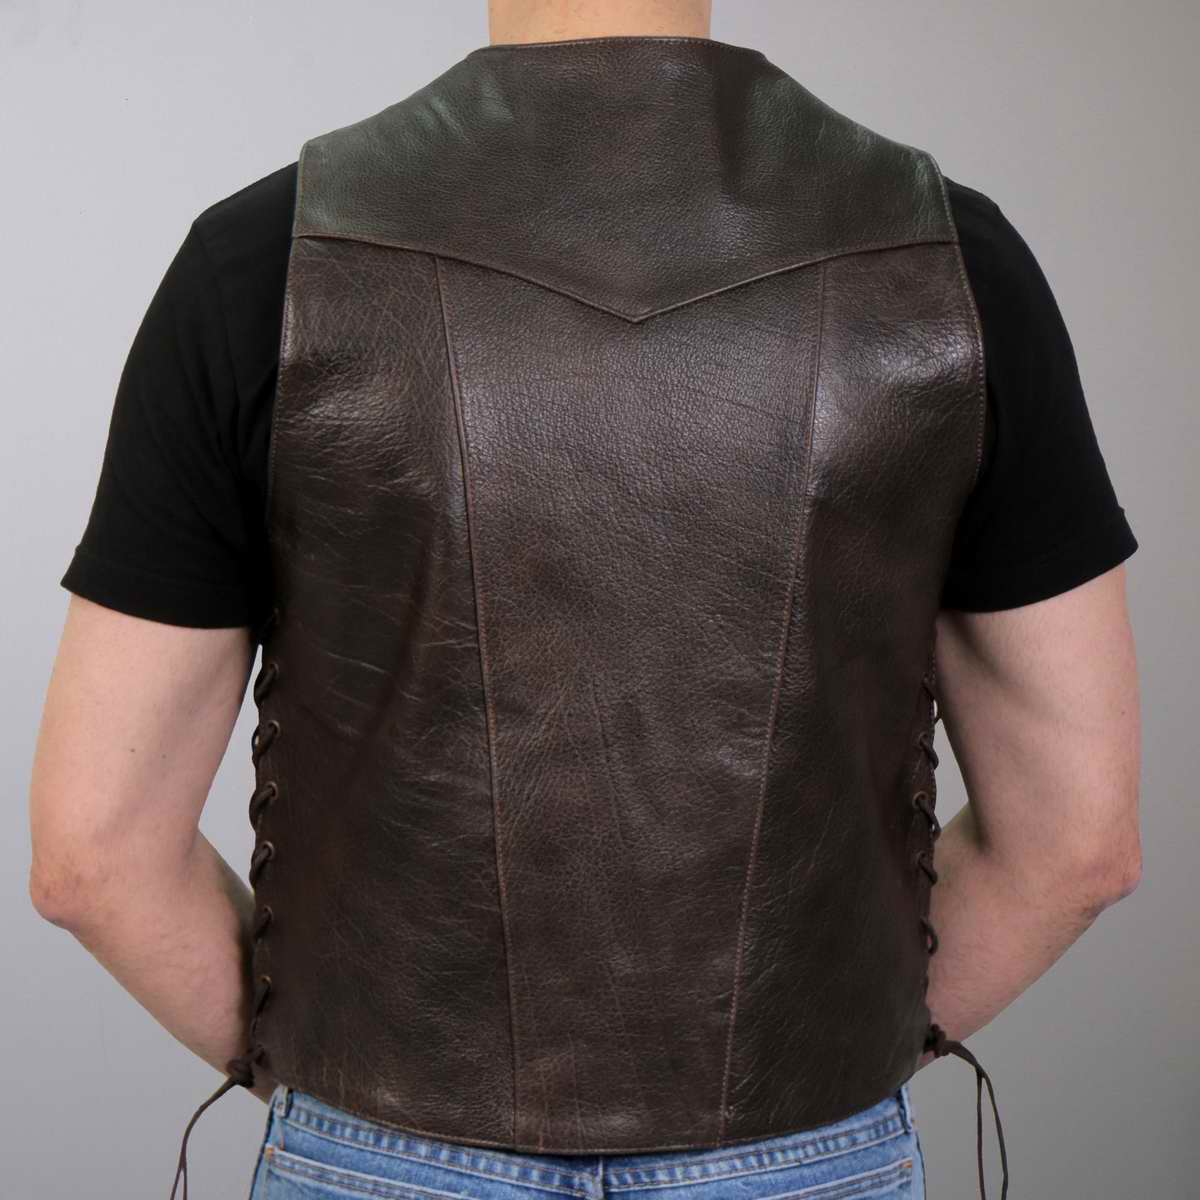 Hot Leathers VSM1040 Men's Retro Brown 'Side Lace' Club Leather Vest